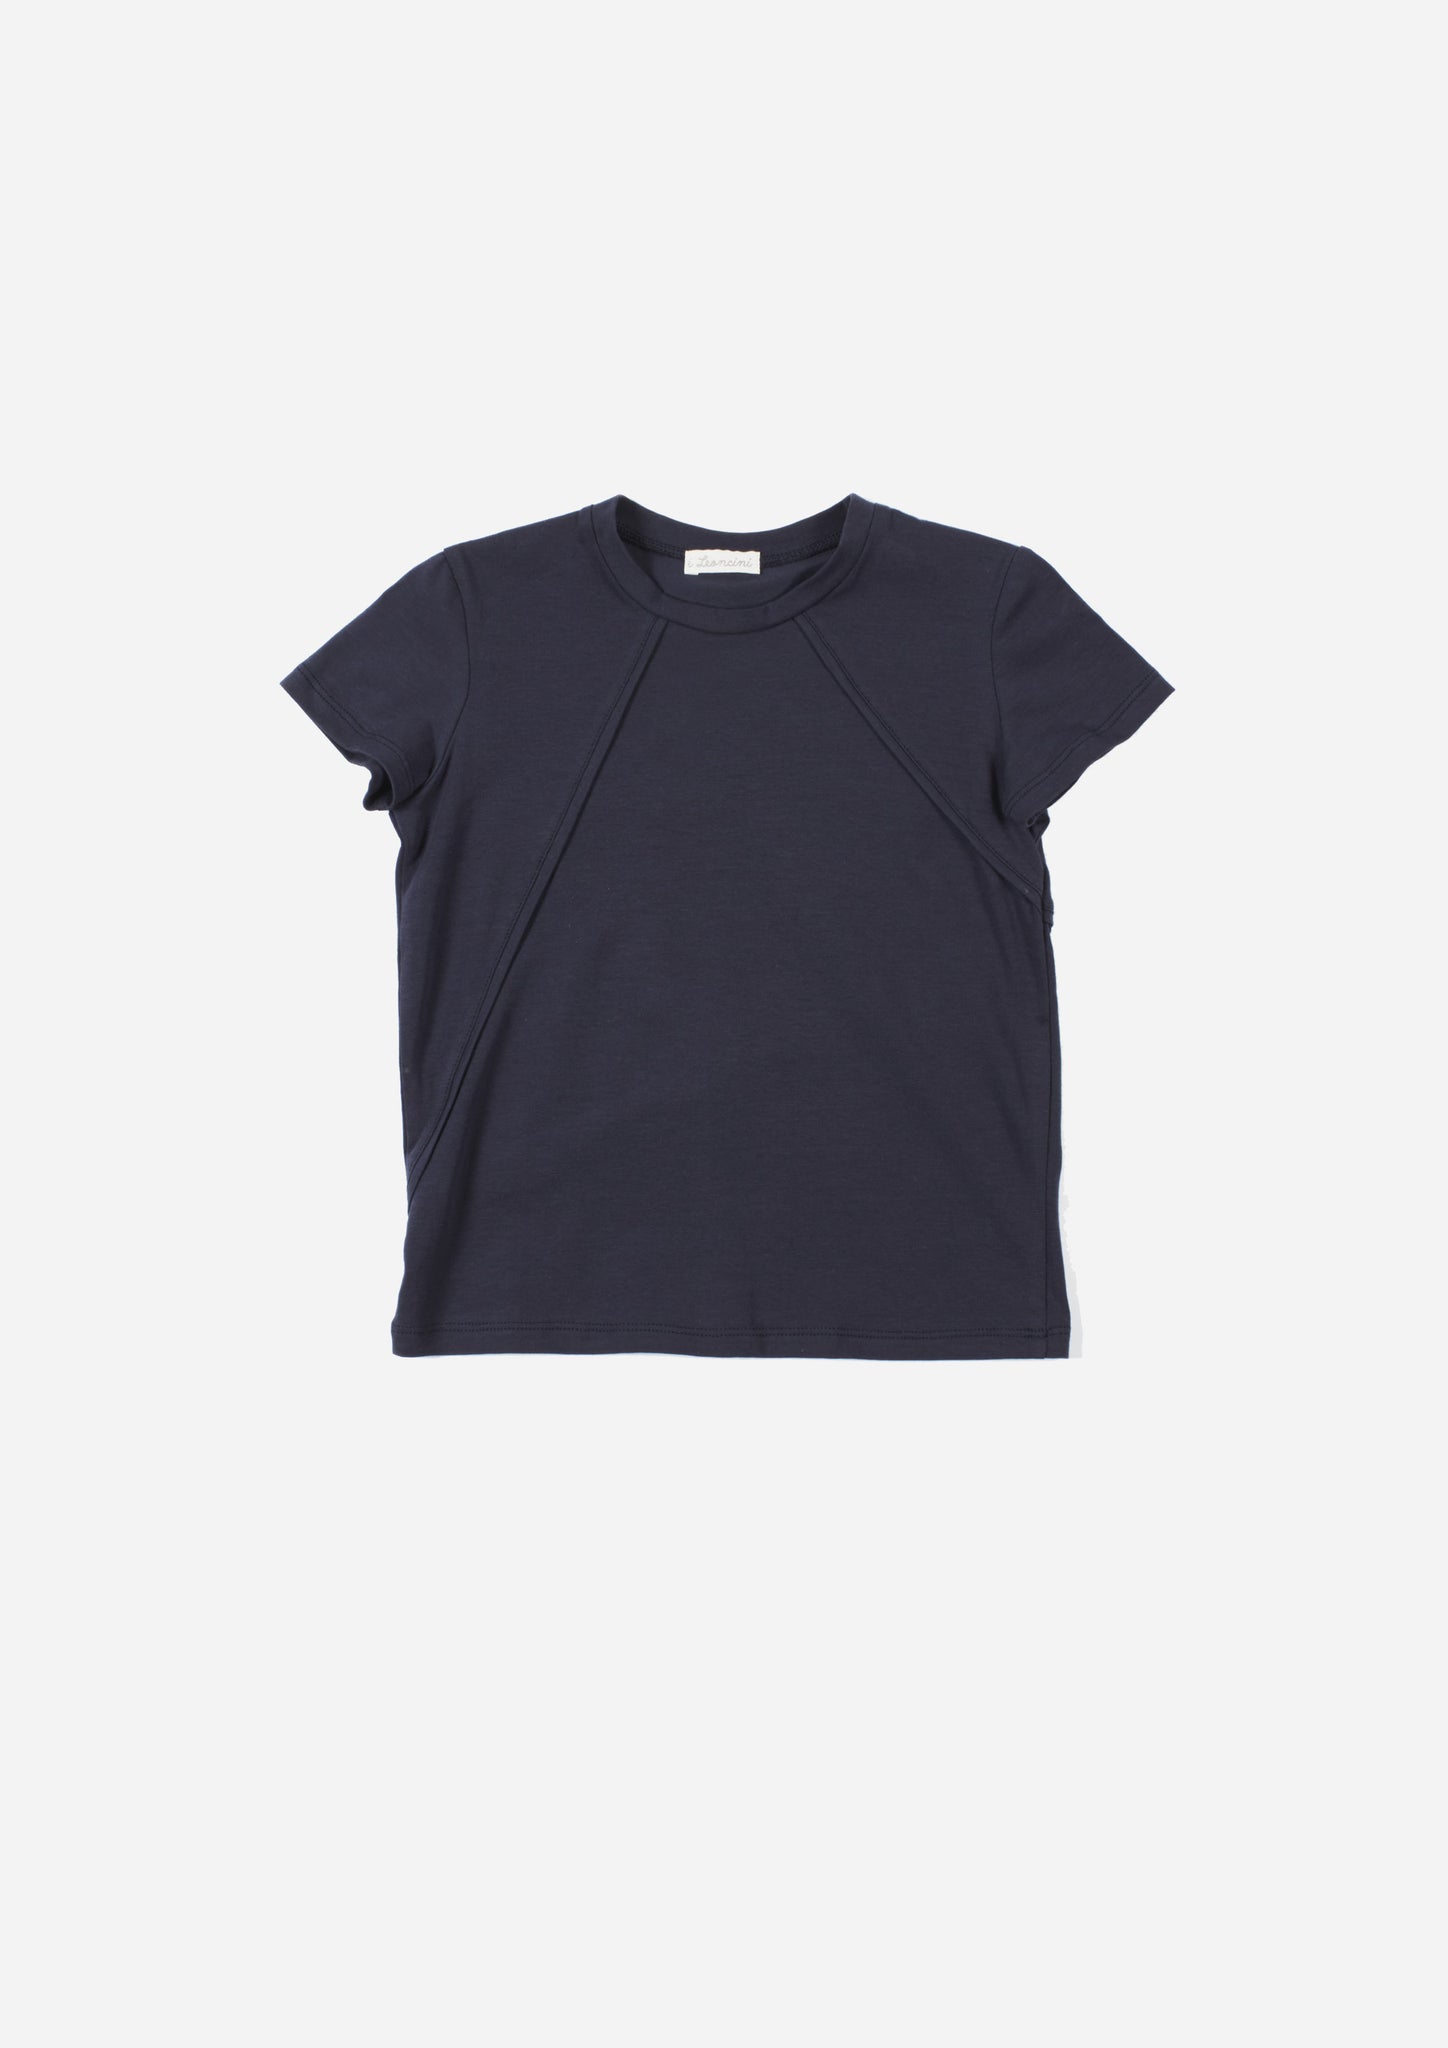 T-shirt GION Blu-OUTLET T-shirt, Camicie, Top e Canotte-I Leoncini Shop